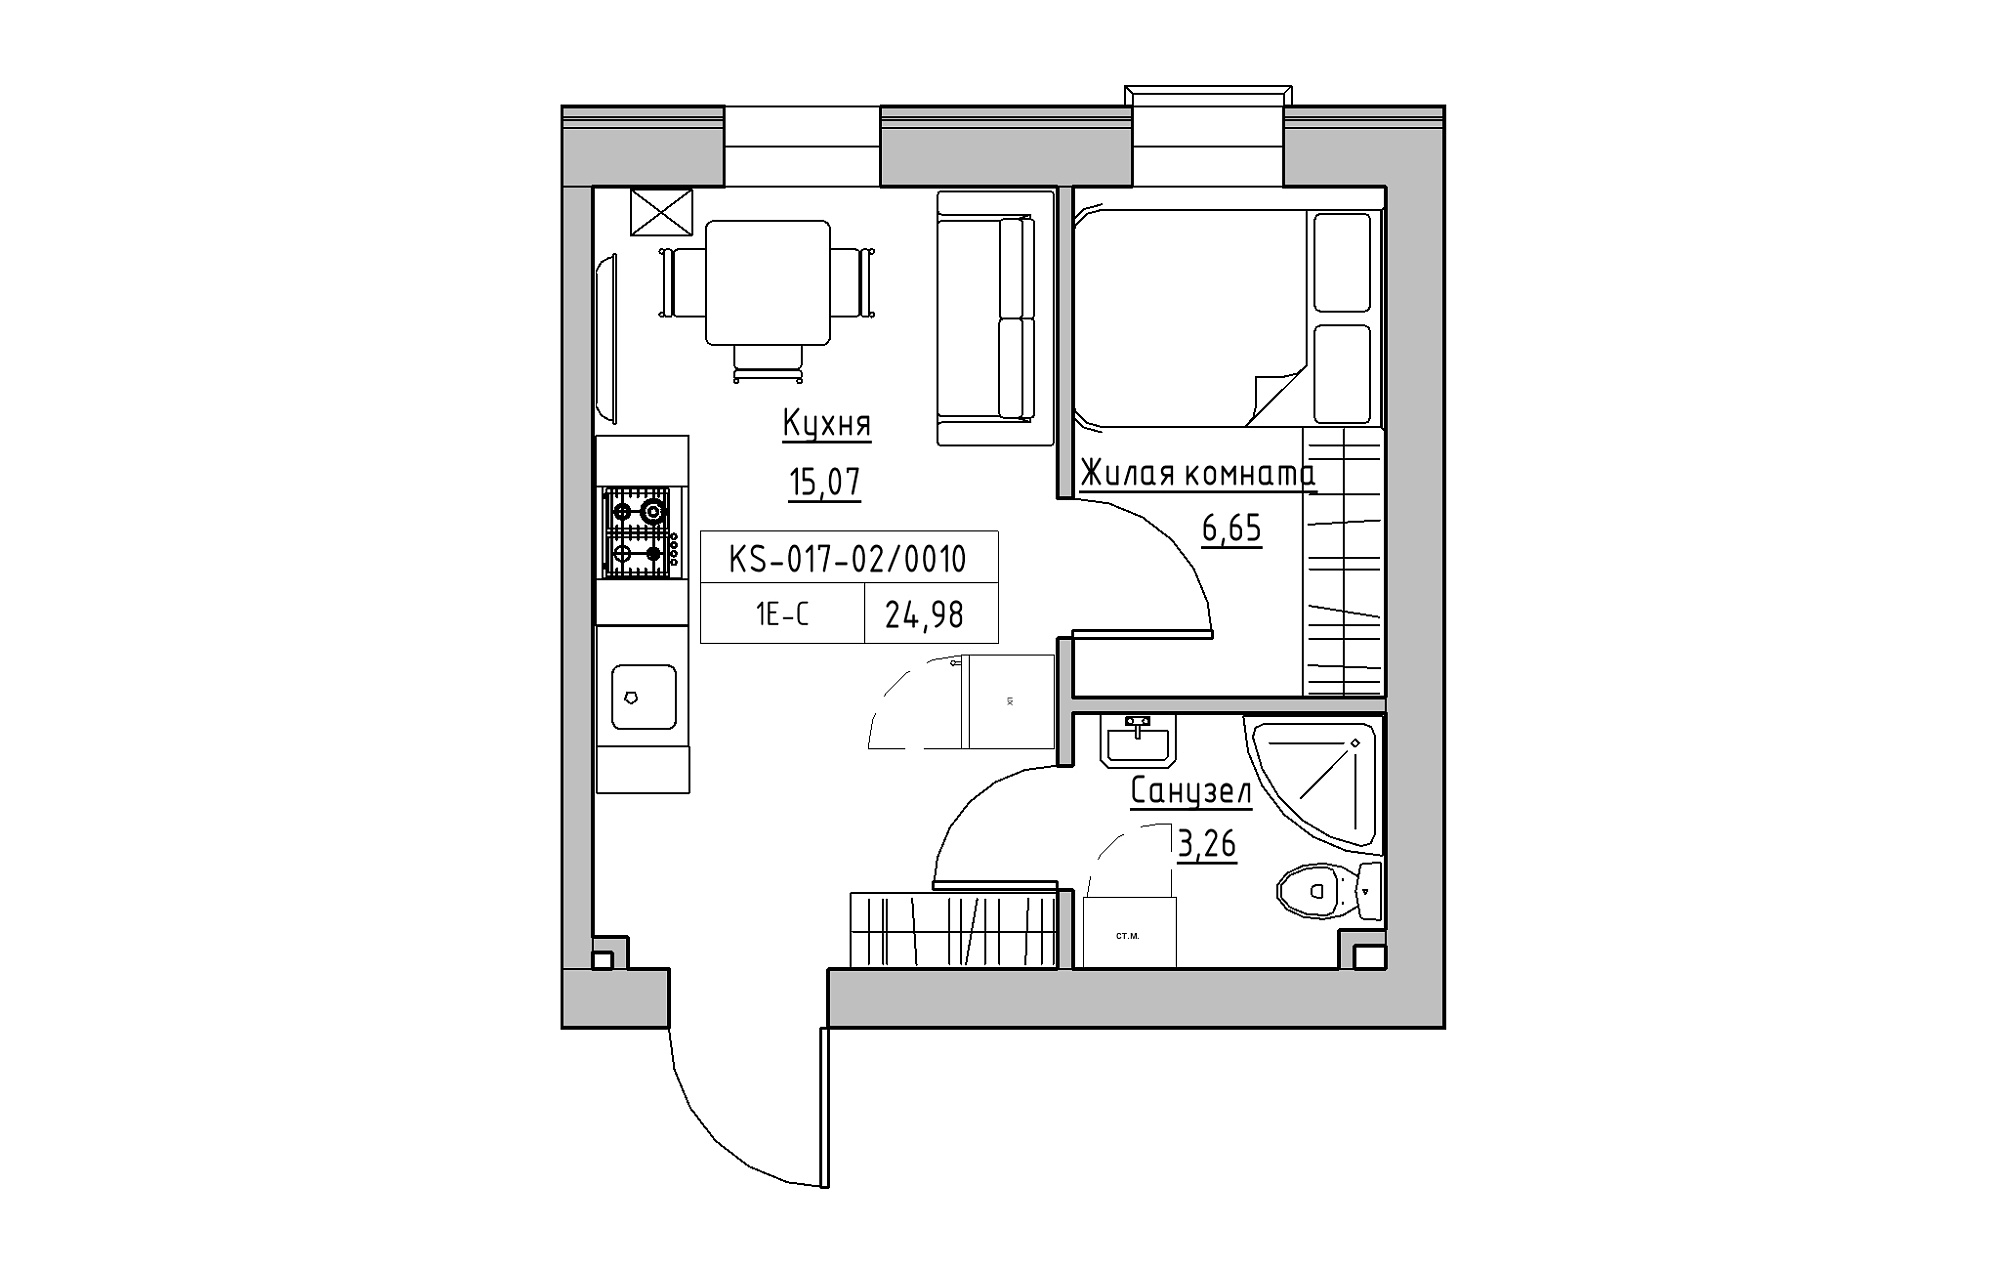 Planning 1-rm flats area 24.98m2, KS-017-02/0010.